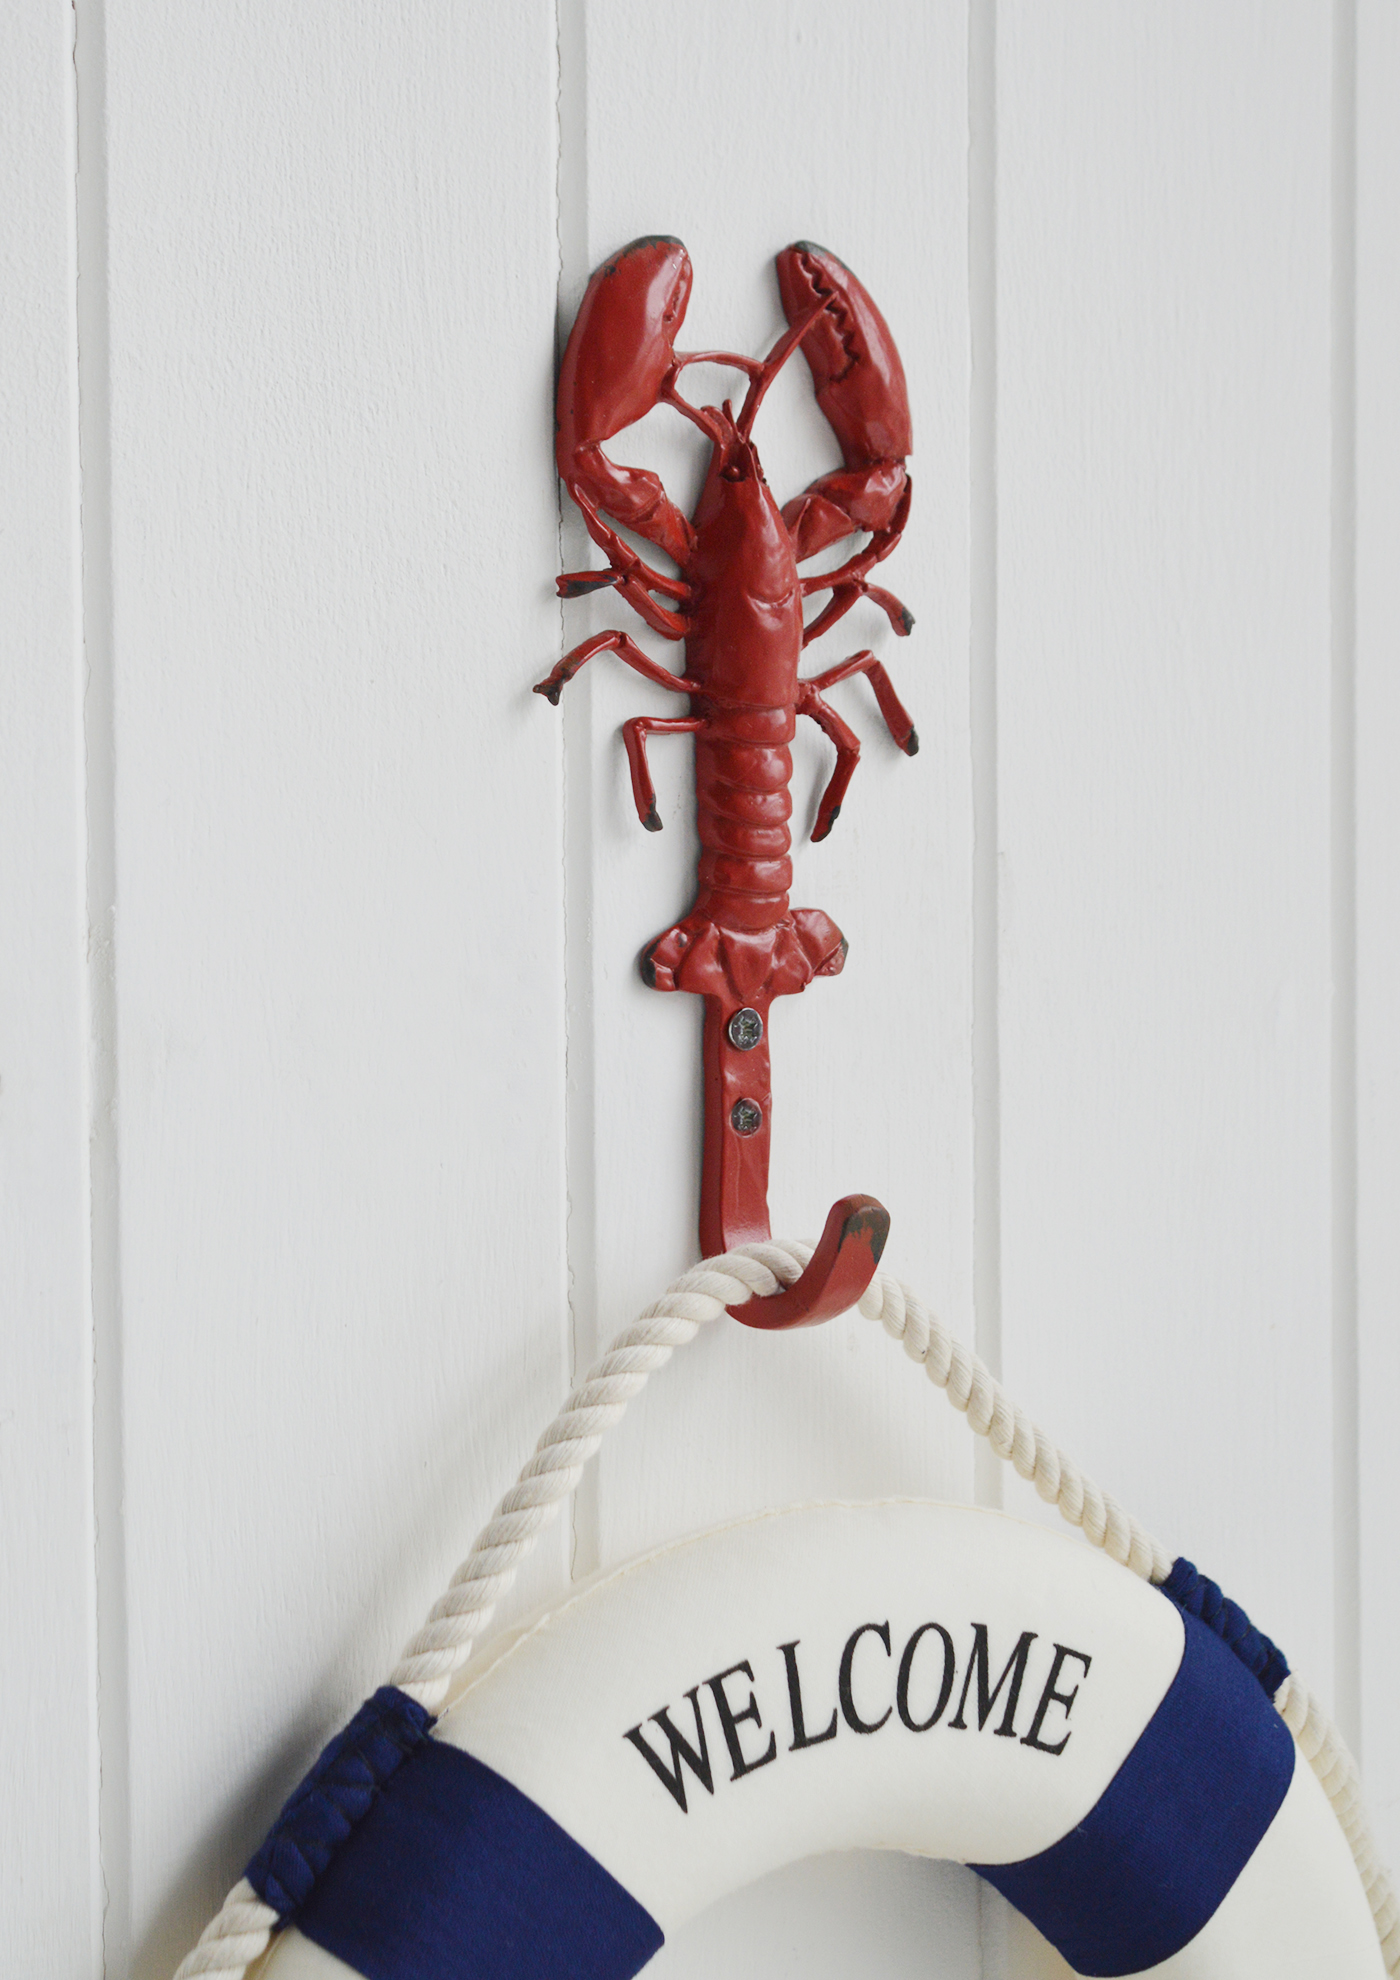 New England coastal decor for home interiors - Lobster wall hook